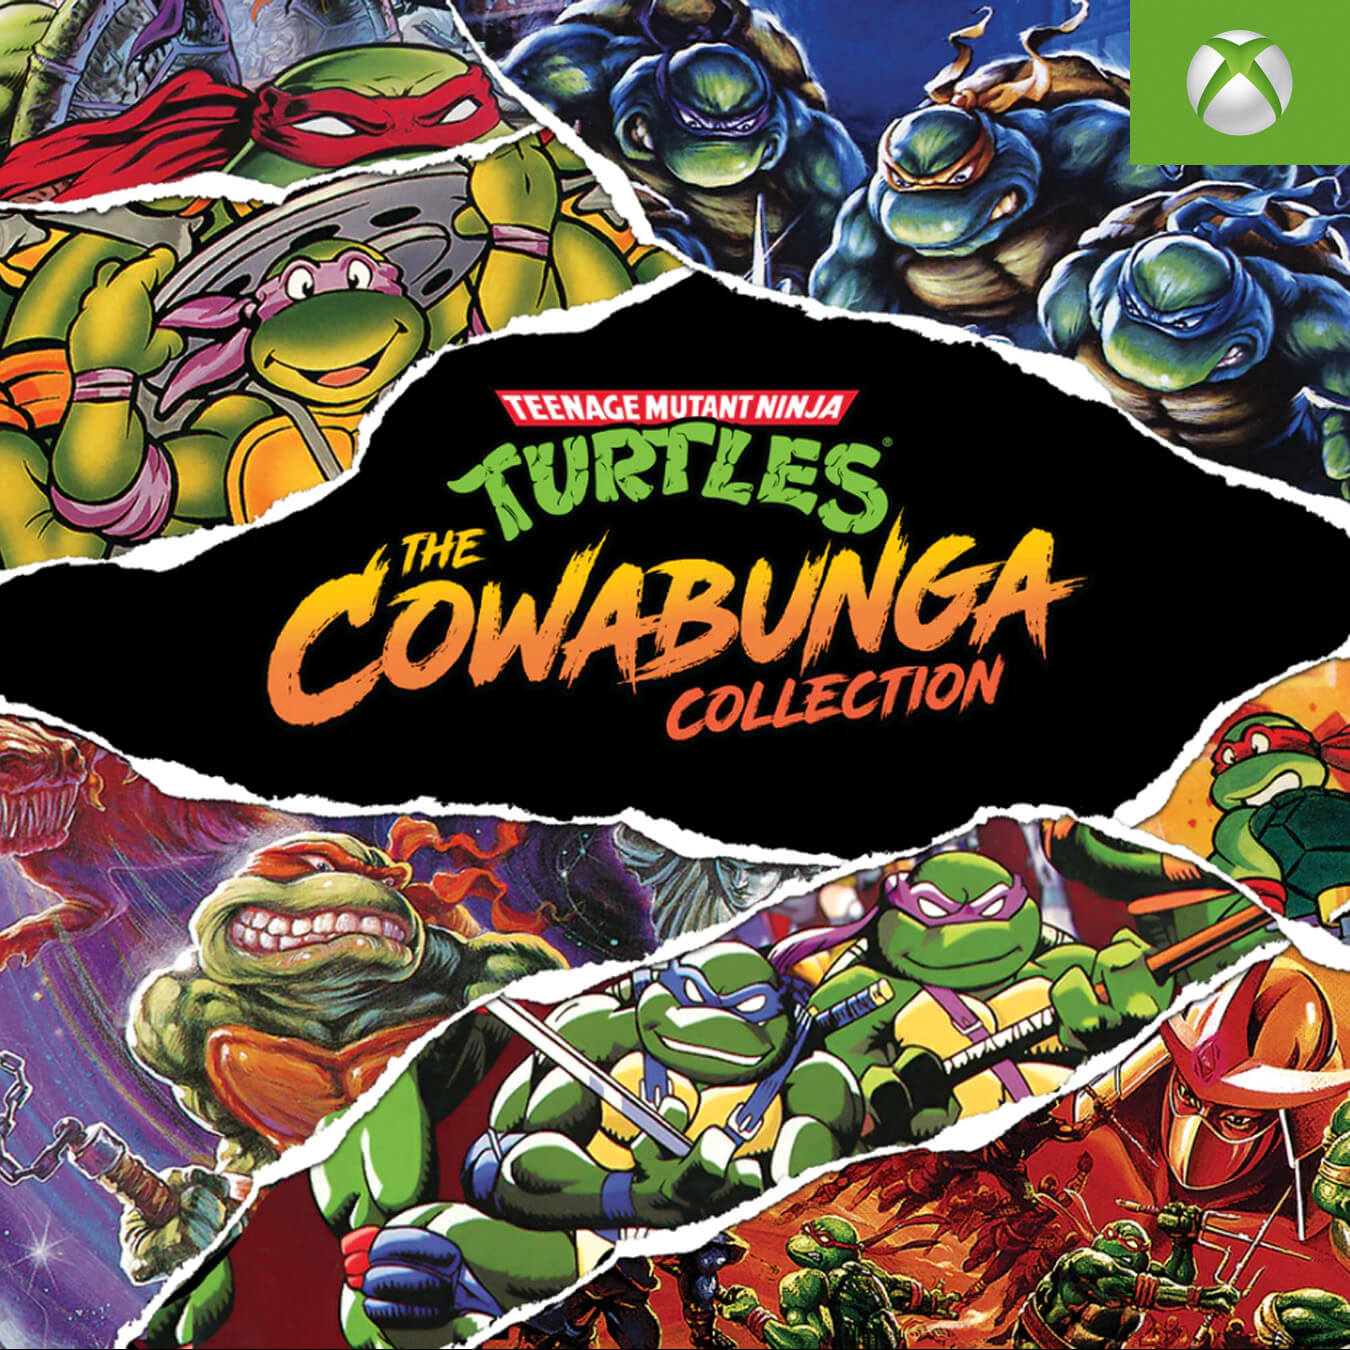 Turtles cowabunga. Teenage Mutant Ninja Turtles: the Cowabunga collection. TMNT Cowabunga collection ps4. Turtles the Cowabunga ps4. Игра teenage Mutant Ninja Turtles: the Cowabunga collection (ps4).